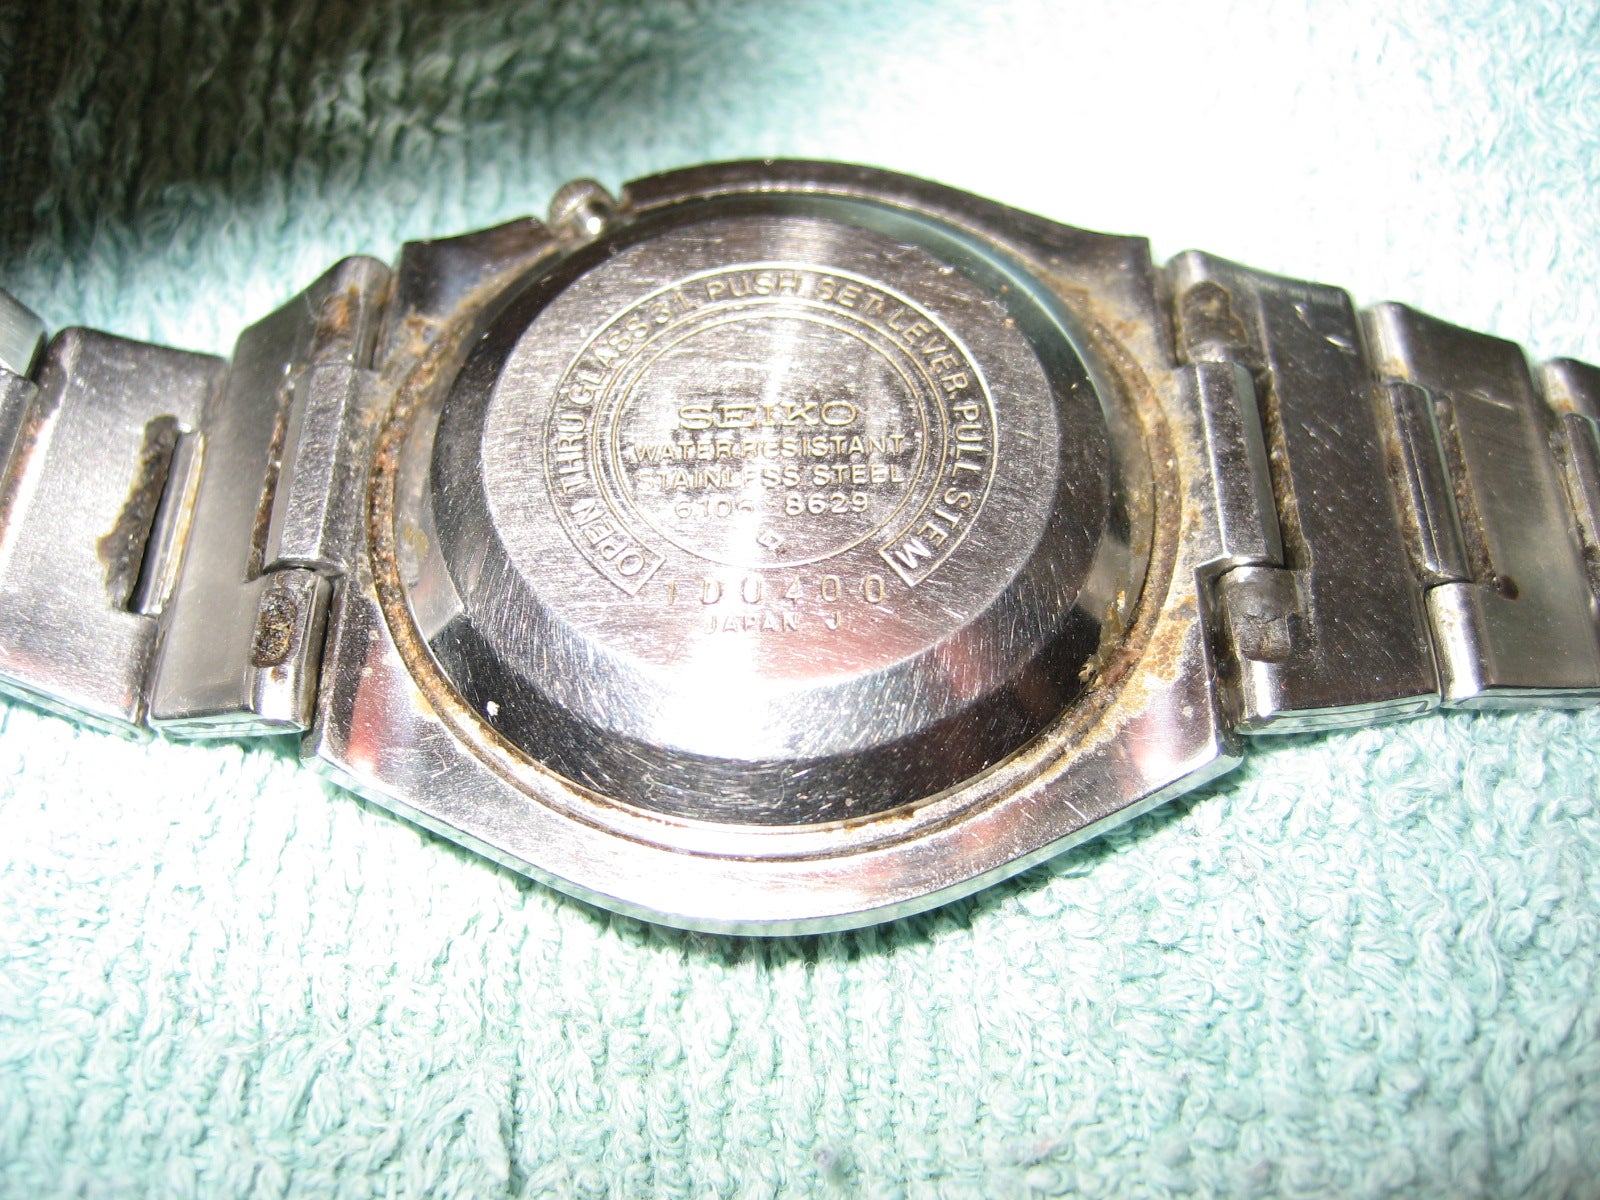 Vintage Seiko - can I take off the bracelet? | WatchUSeek Watch Forums